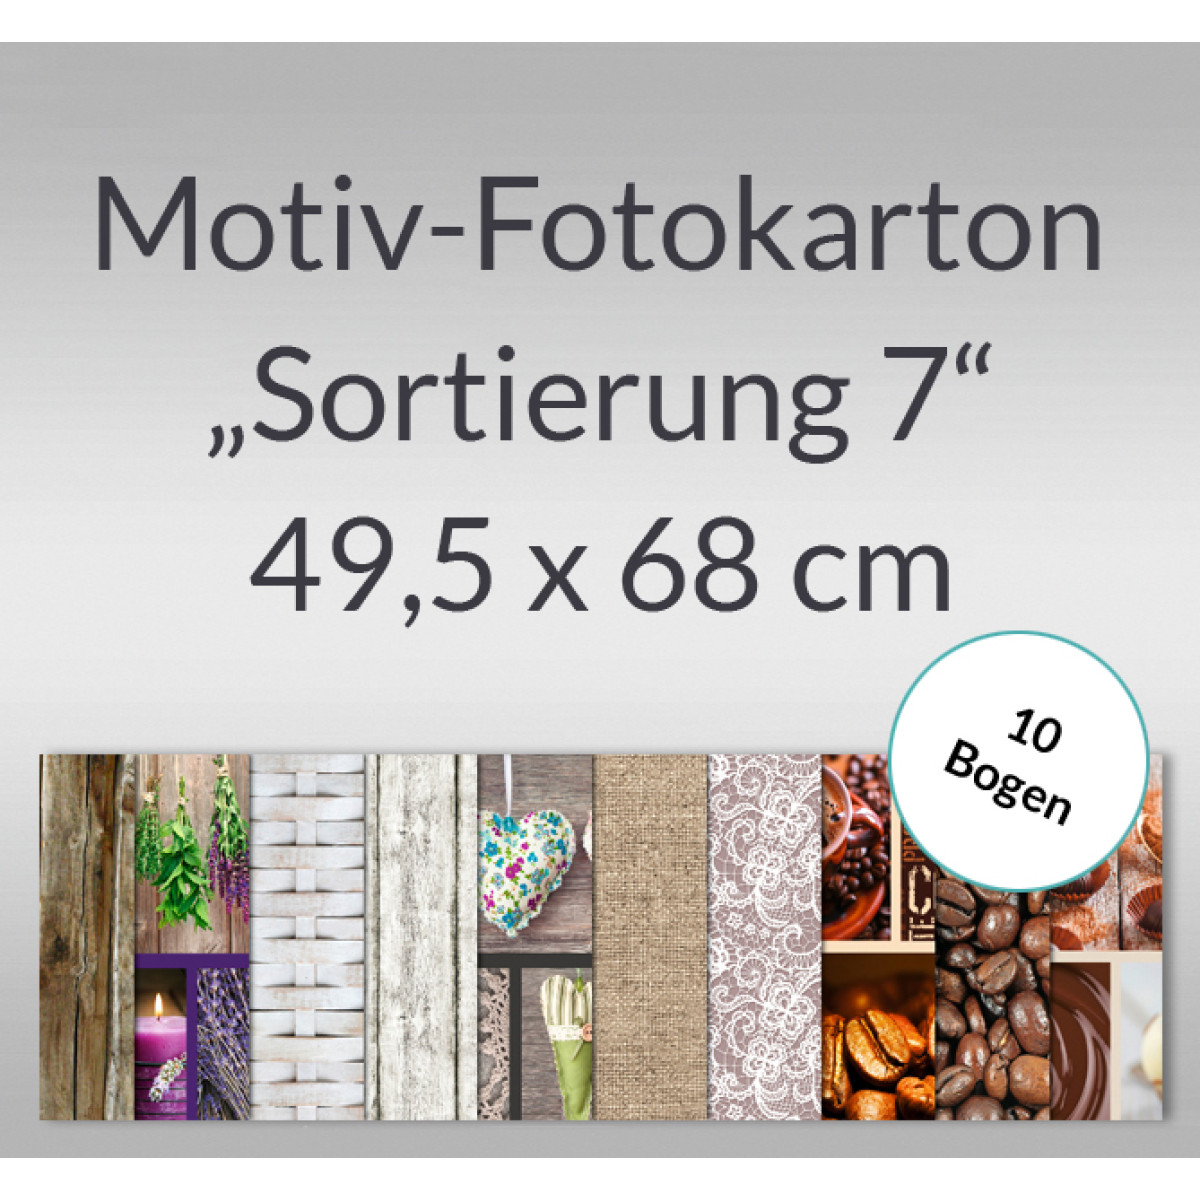 Motiv-Fotokarton "Sortierung 7" 49,5 x 68 cm - 10 Bogen